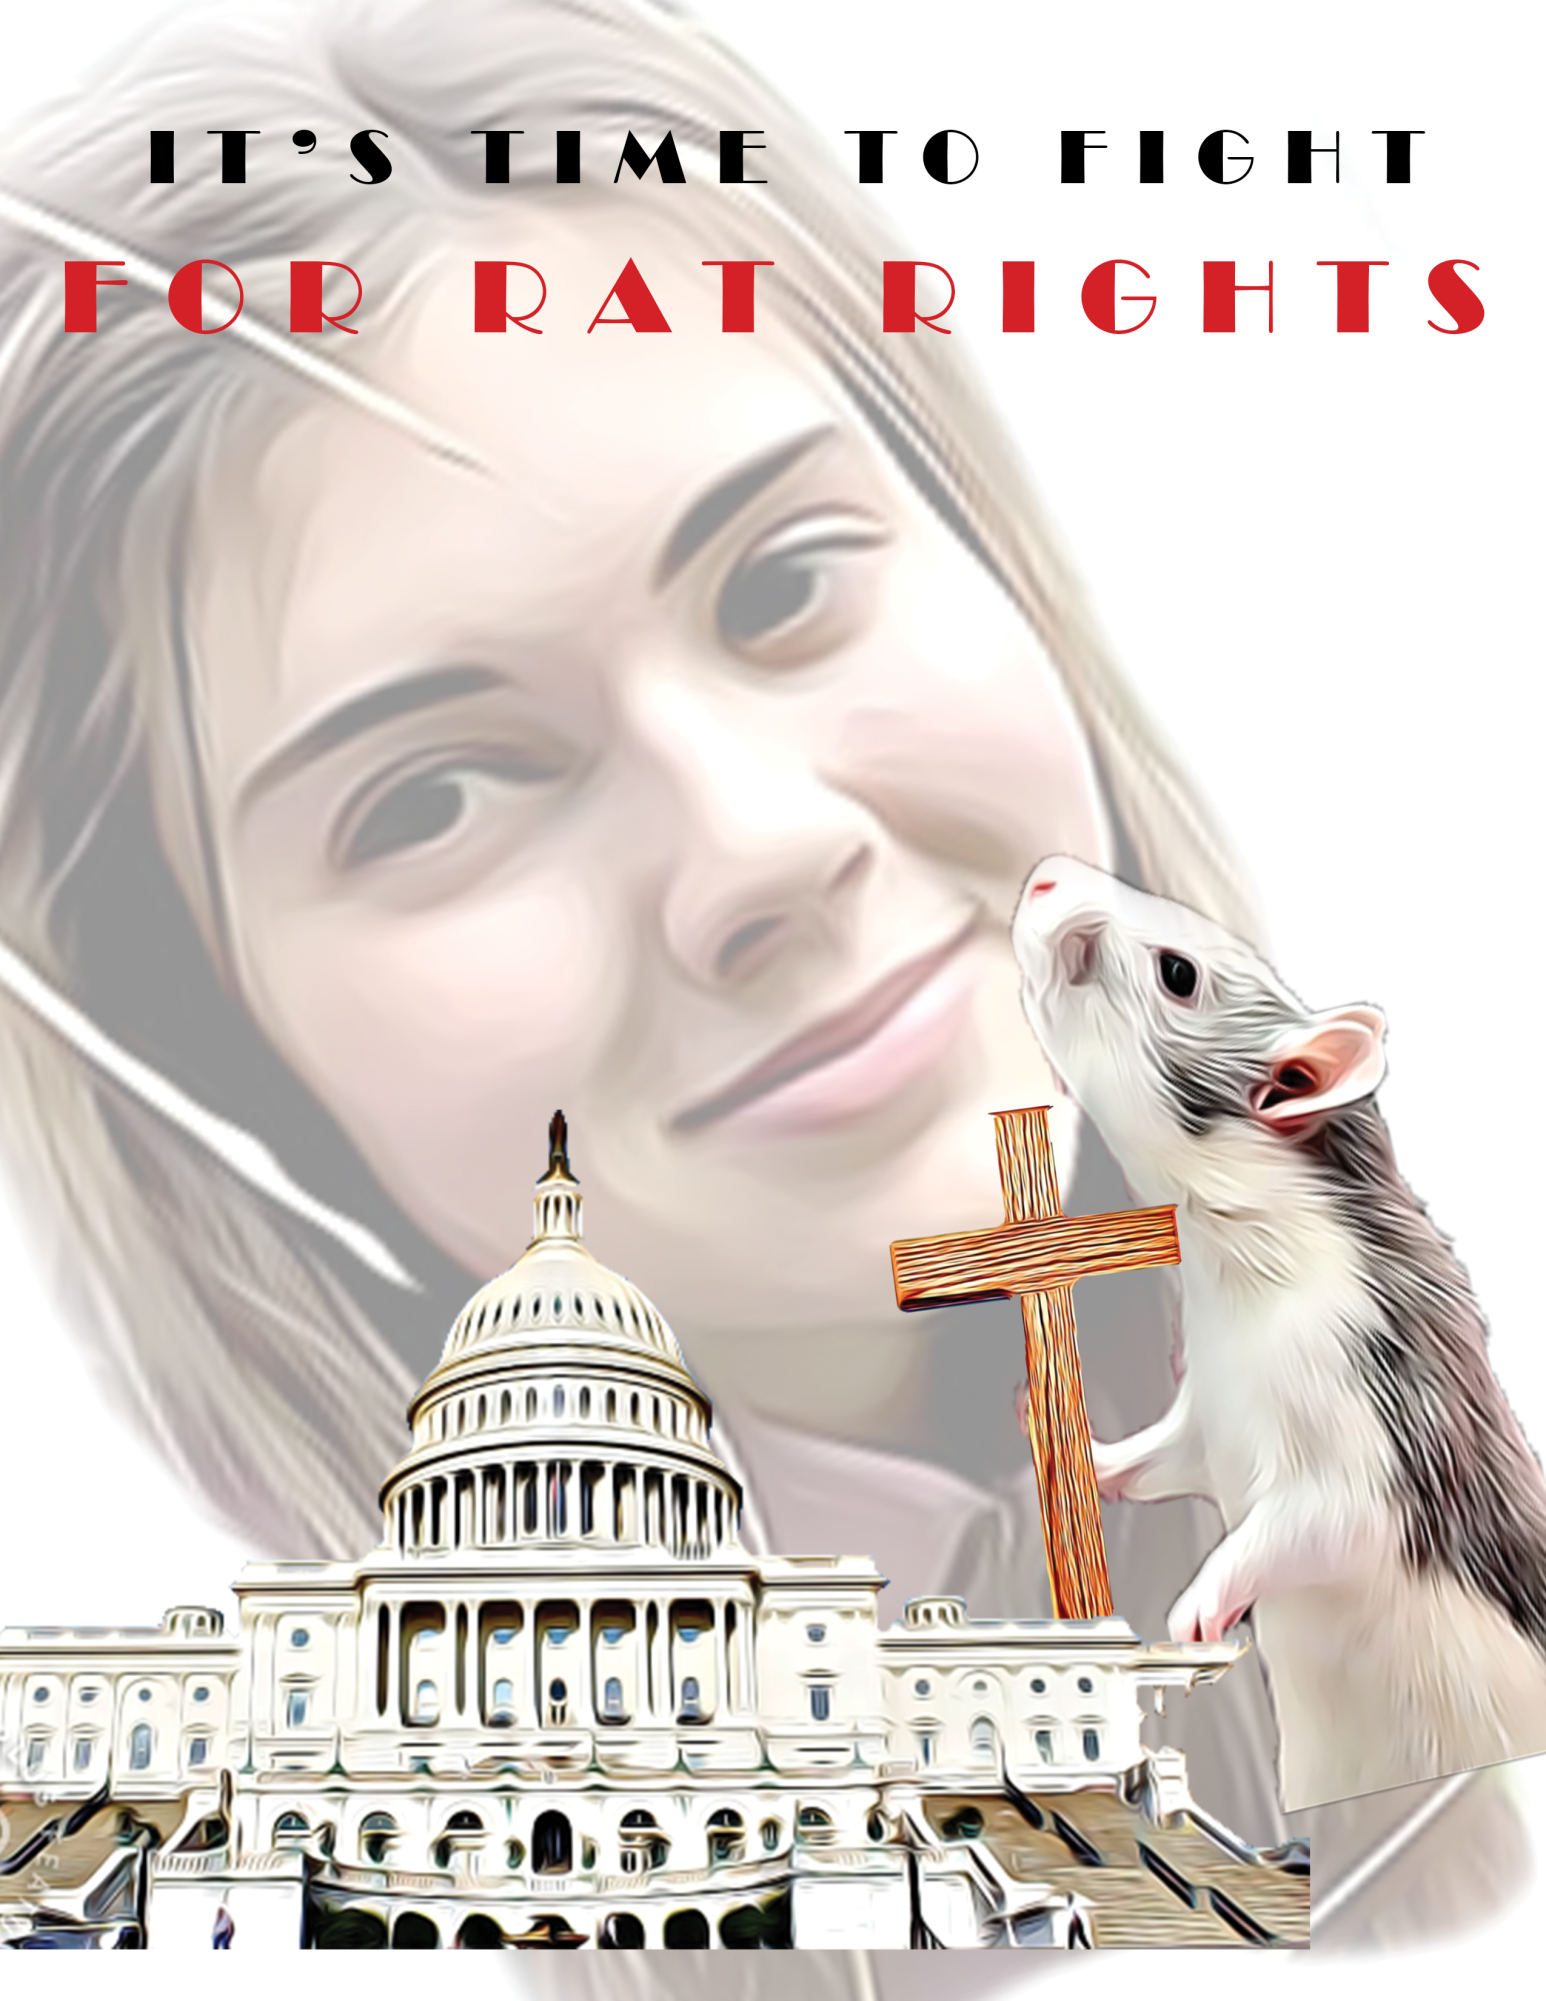 Rat cult propaganda poster. Image by Karah Schmidt.